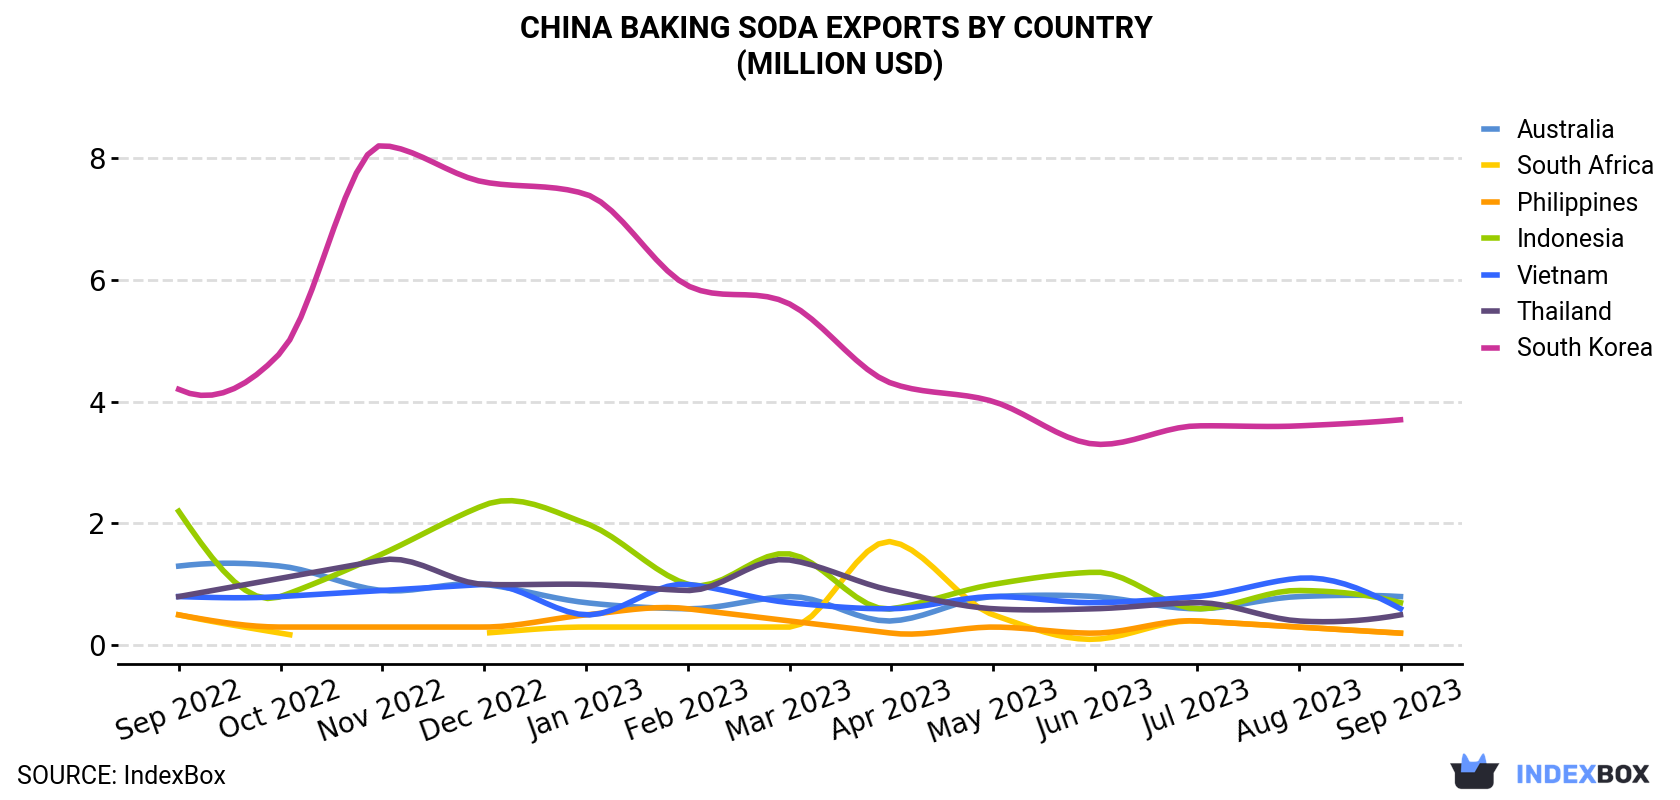 China Baking Soda Exports By Country (Million USD)